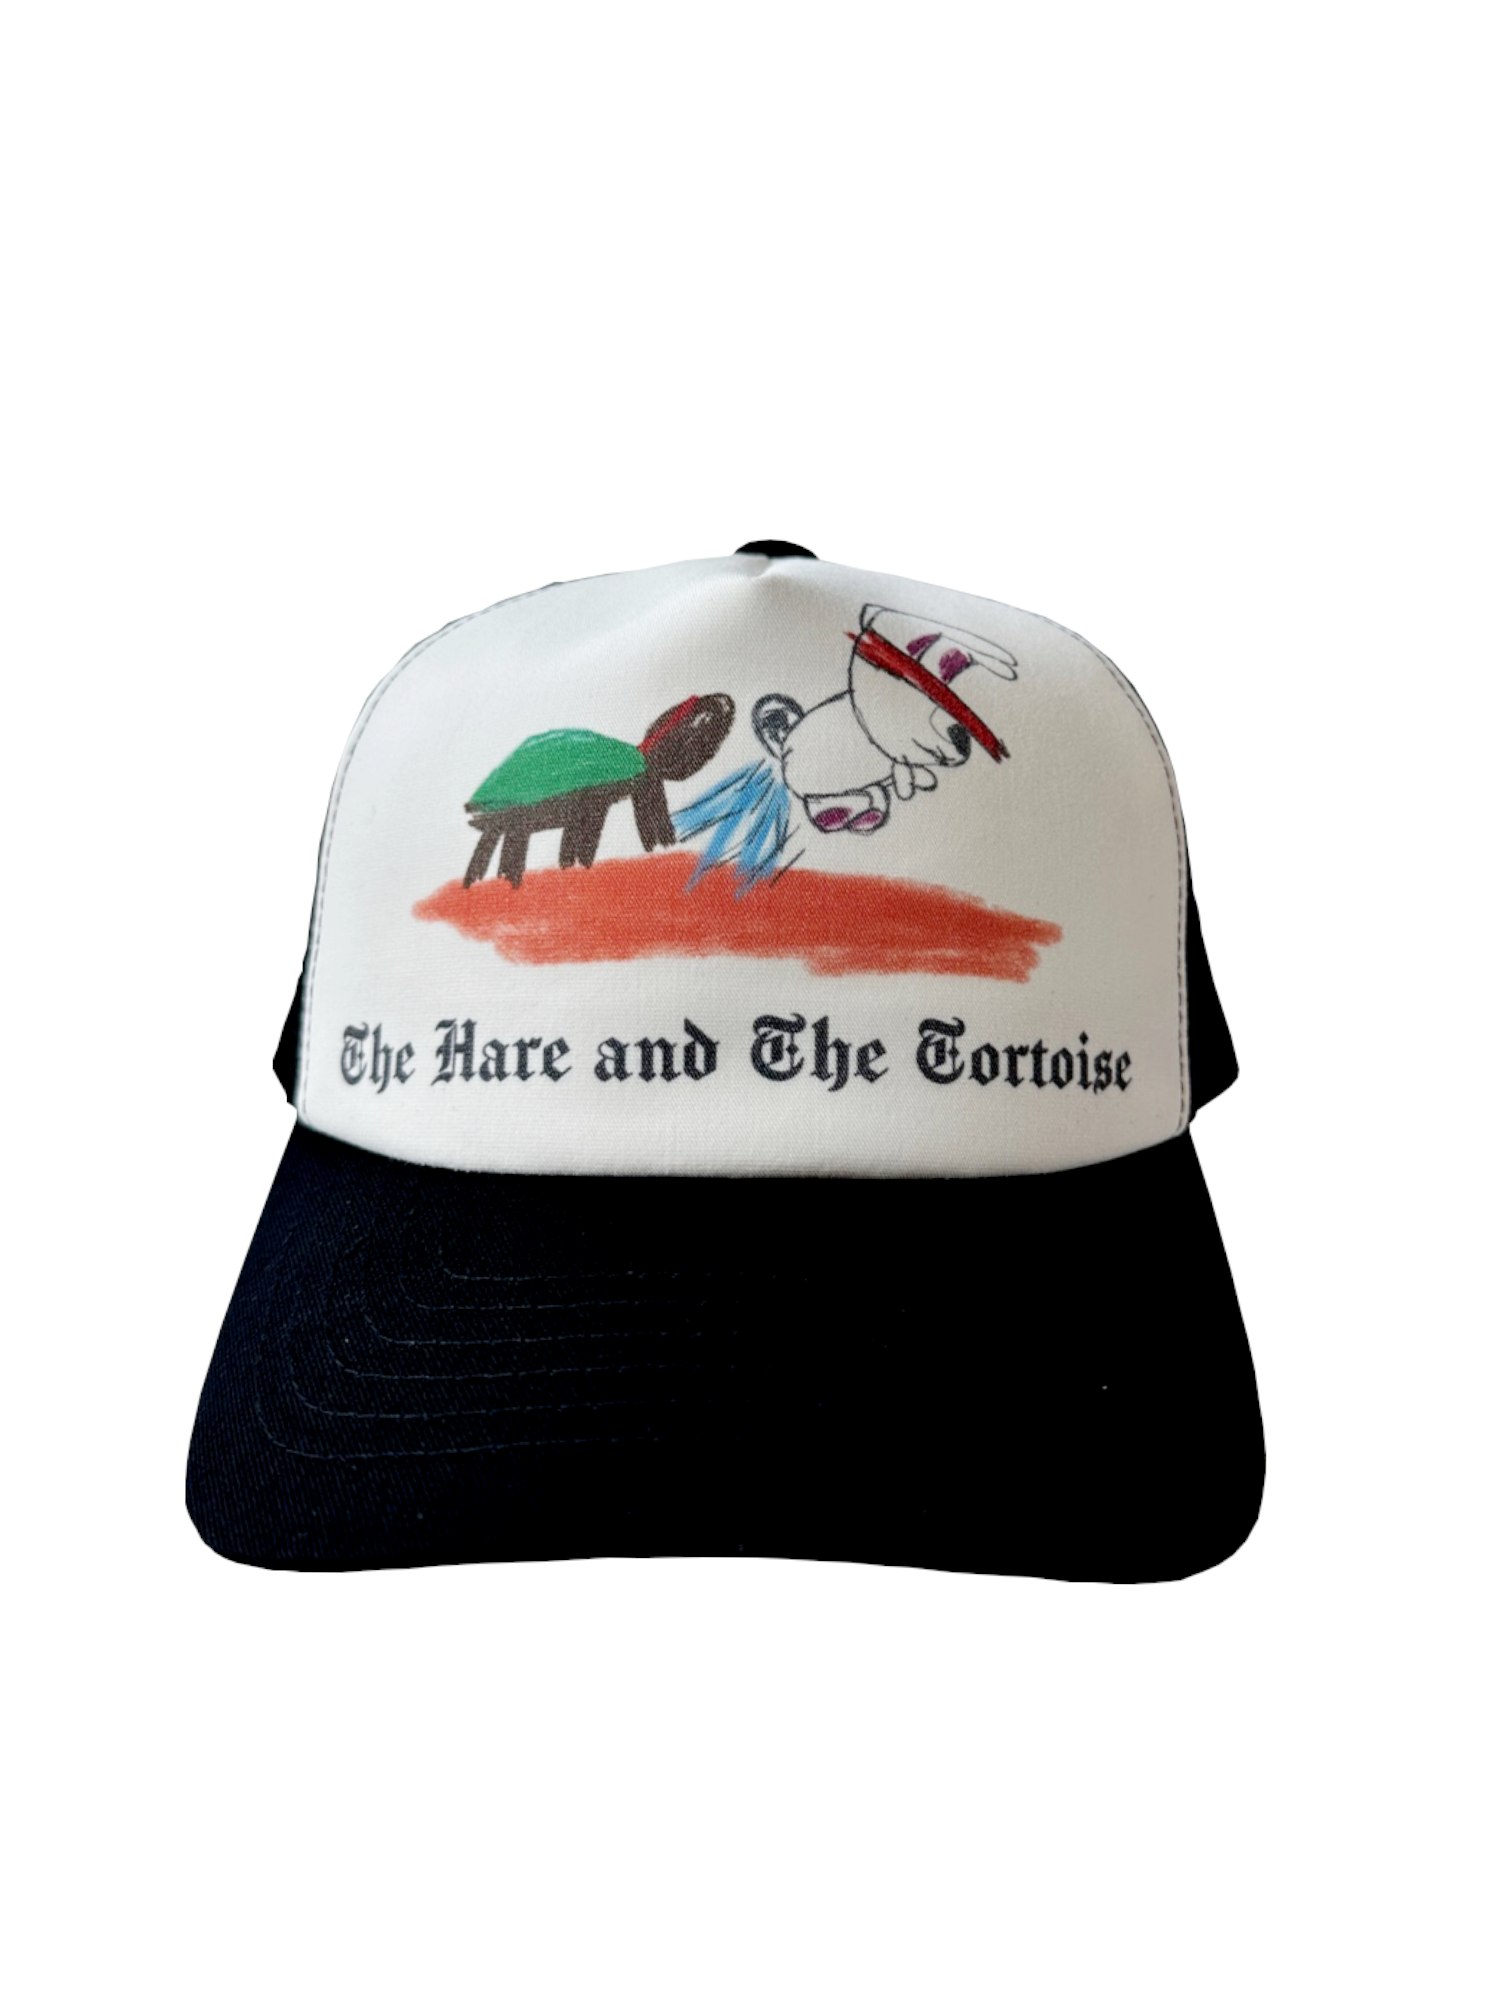 The Hare and Tortoise Trucker Cap - Black